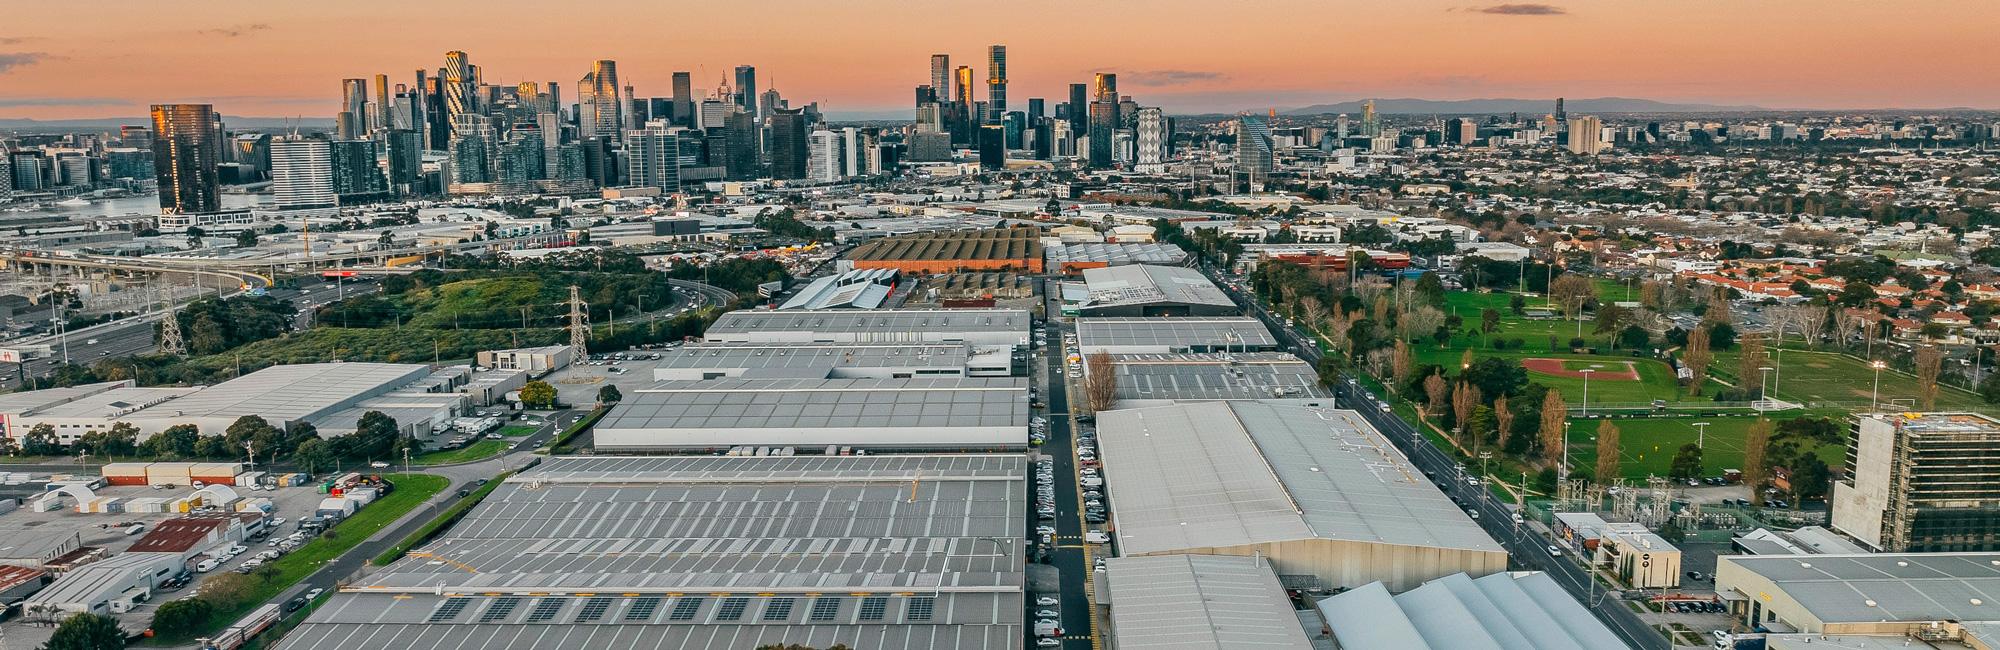 Port Melbourne Industrial Estate aerial perspective